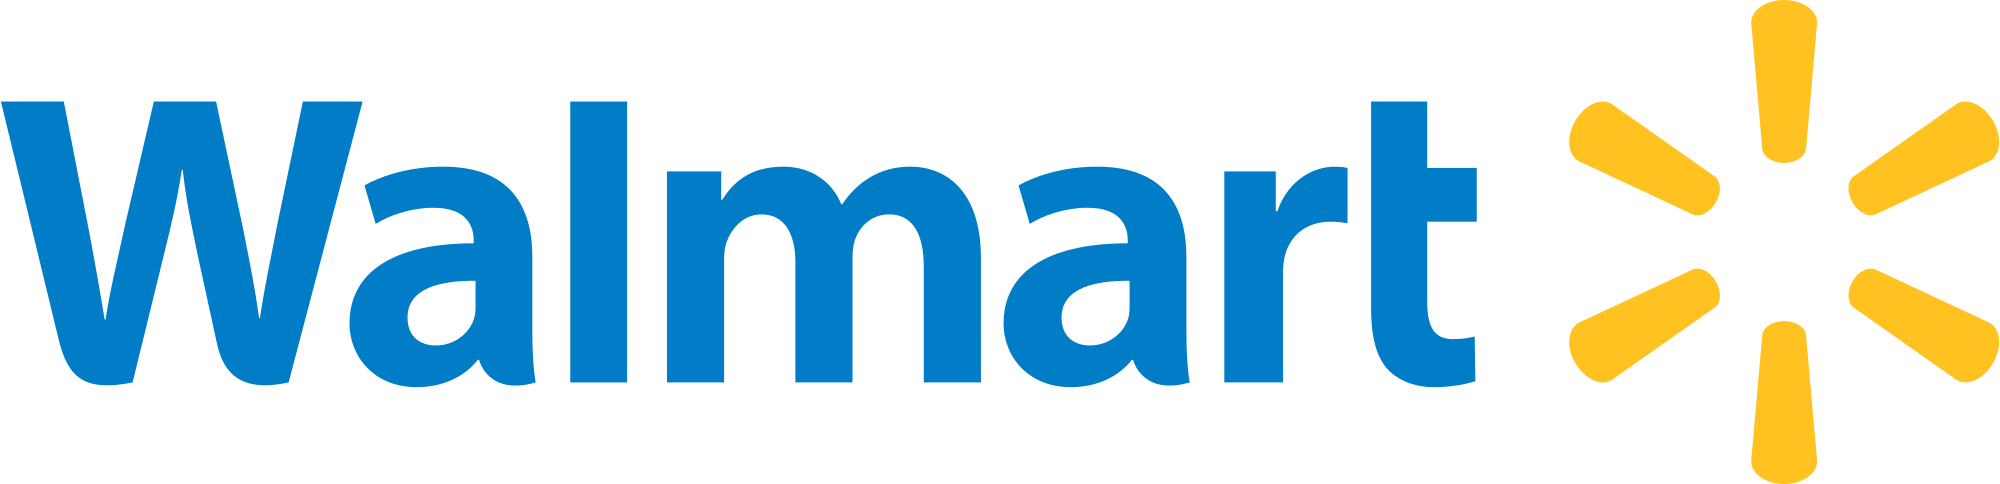 New_Walmart_Logo.svg.png